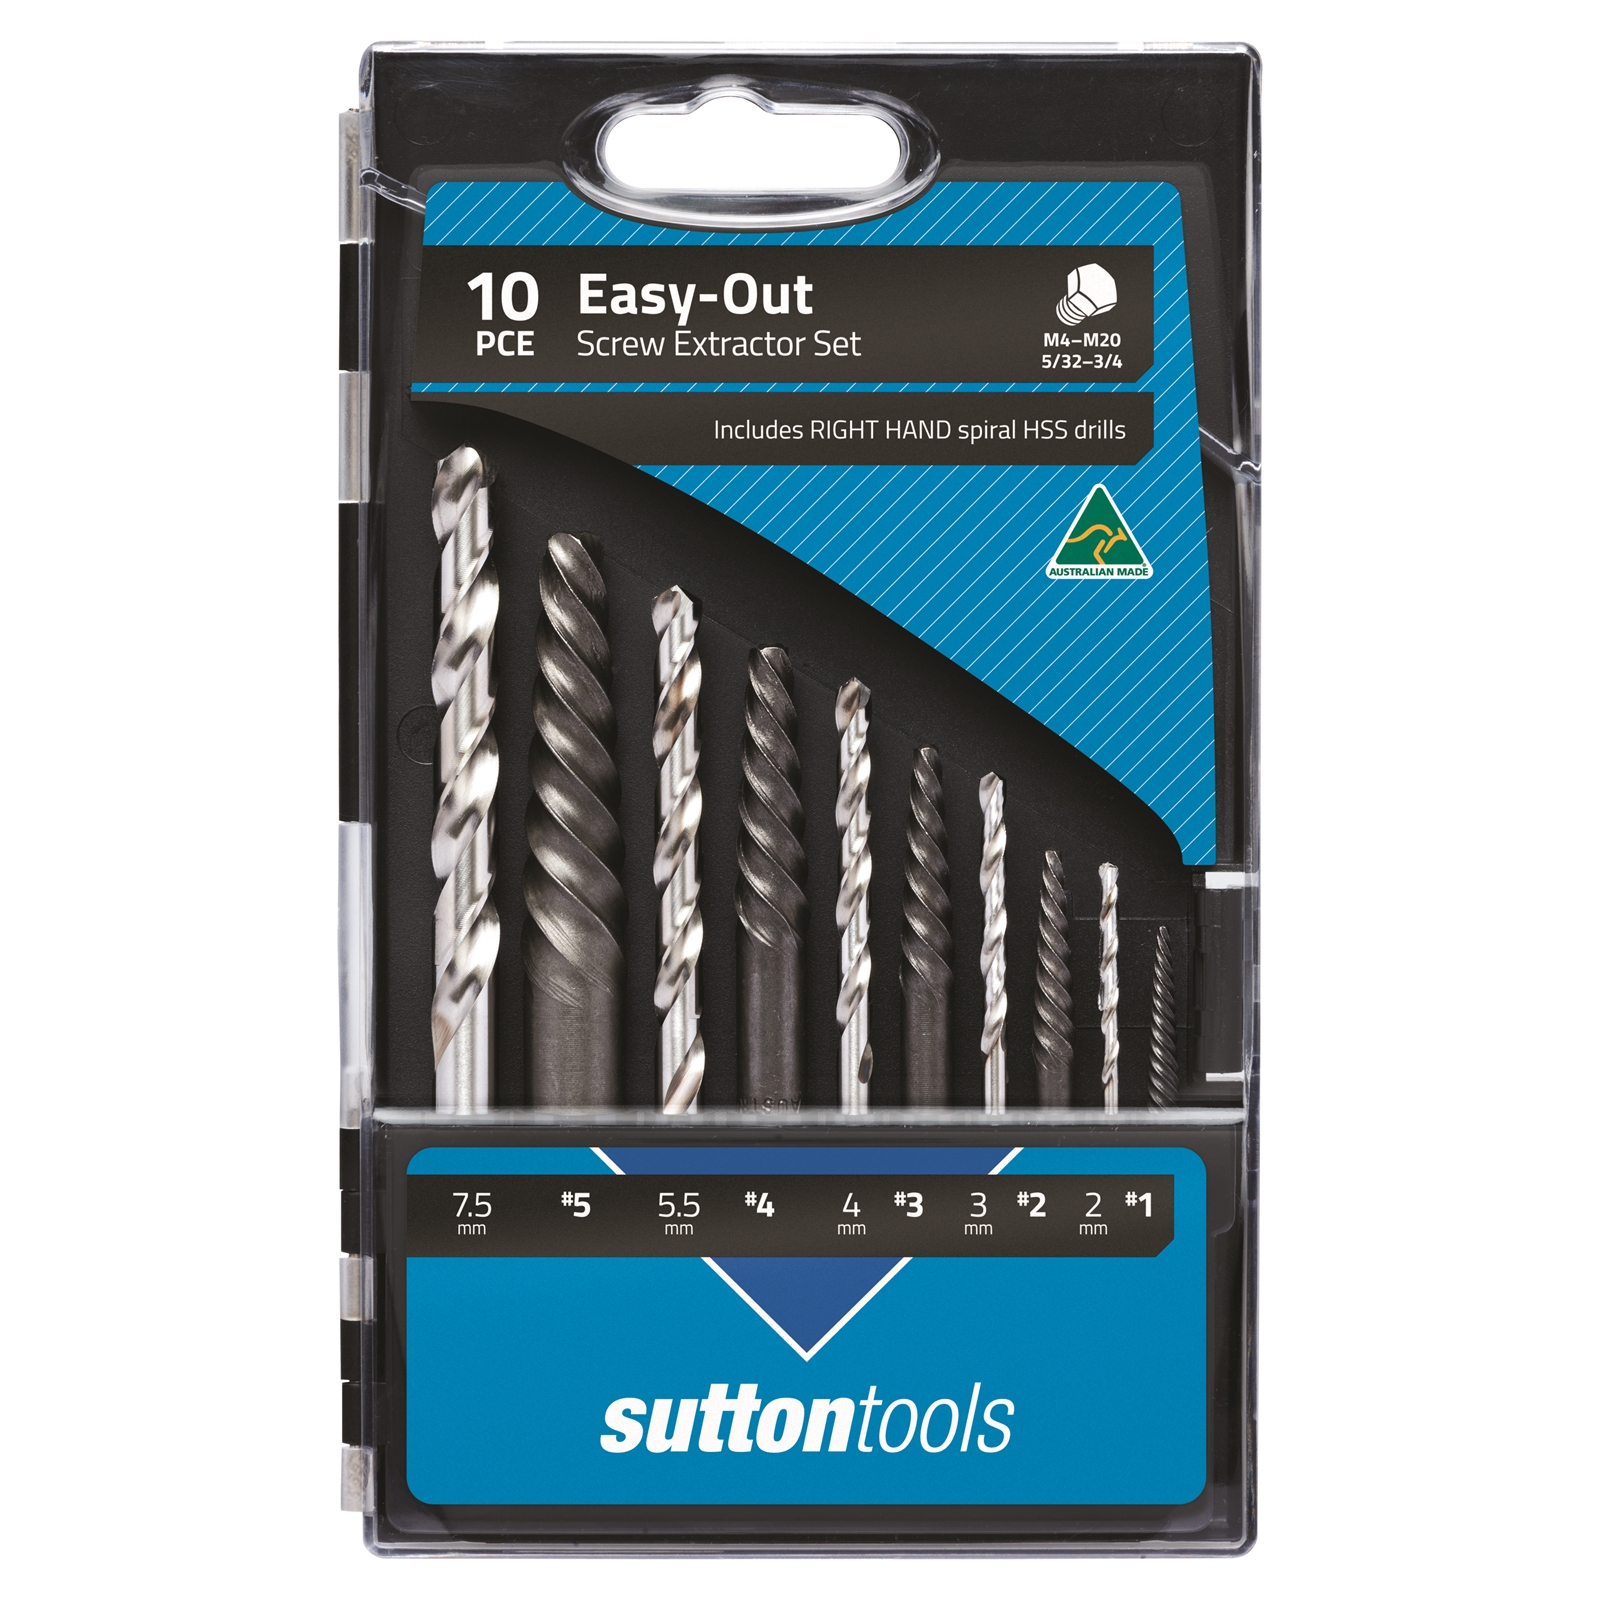 Sutton Tools 10 Piece Screw Extractor Set